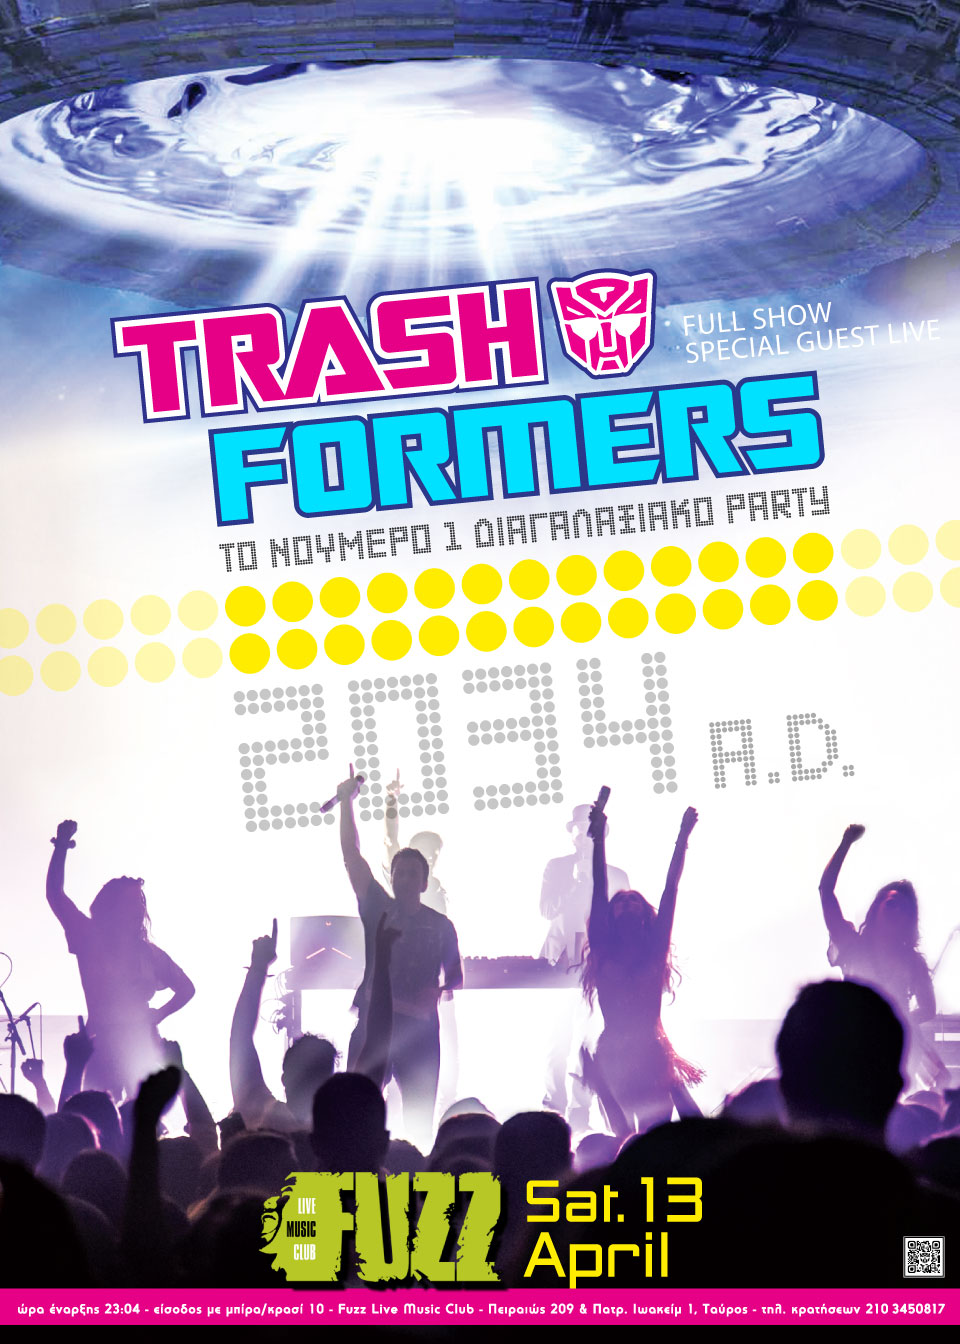 Trashformers 2034 A.D. @Fuzz - Sat. 9/2/19